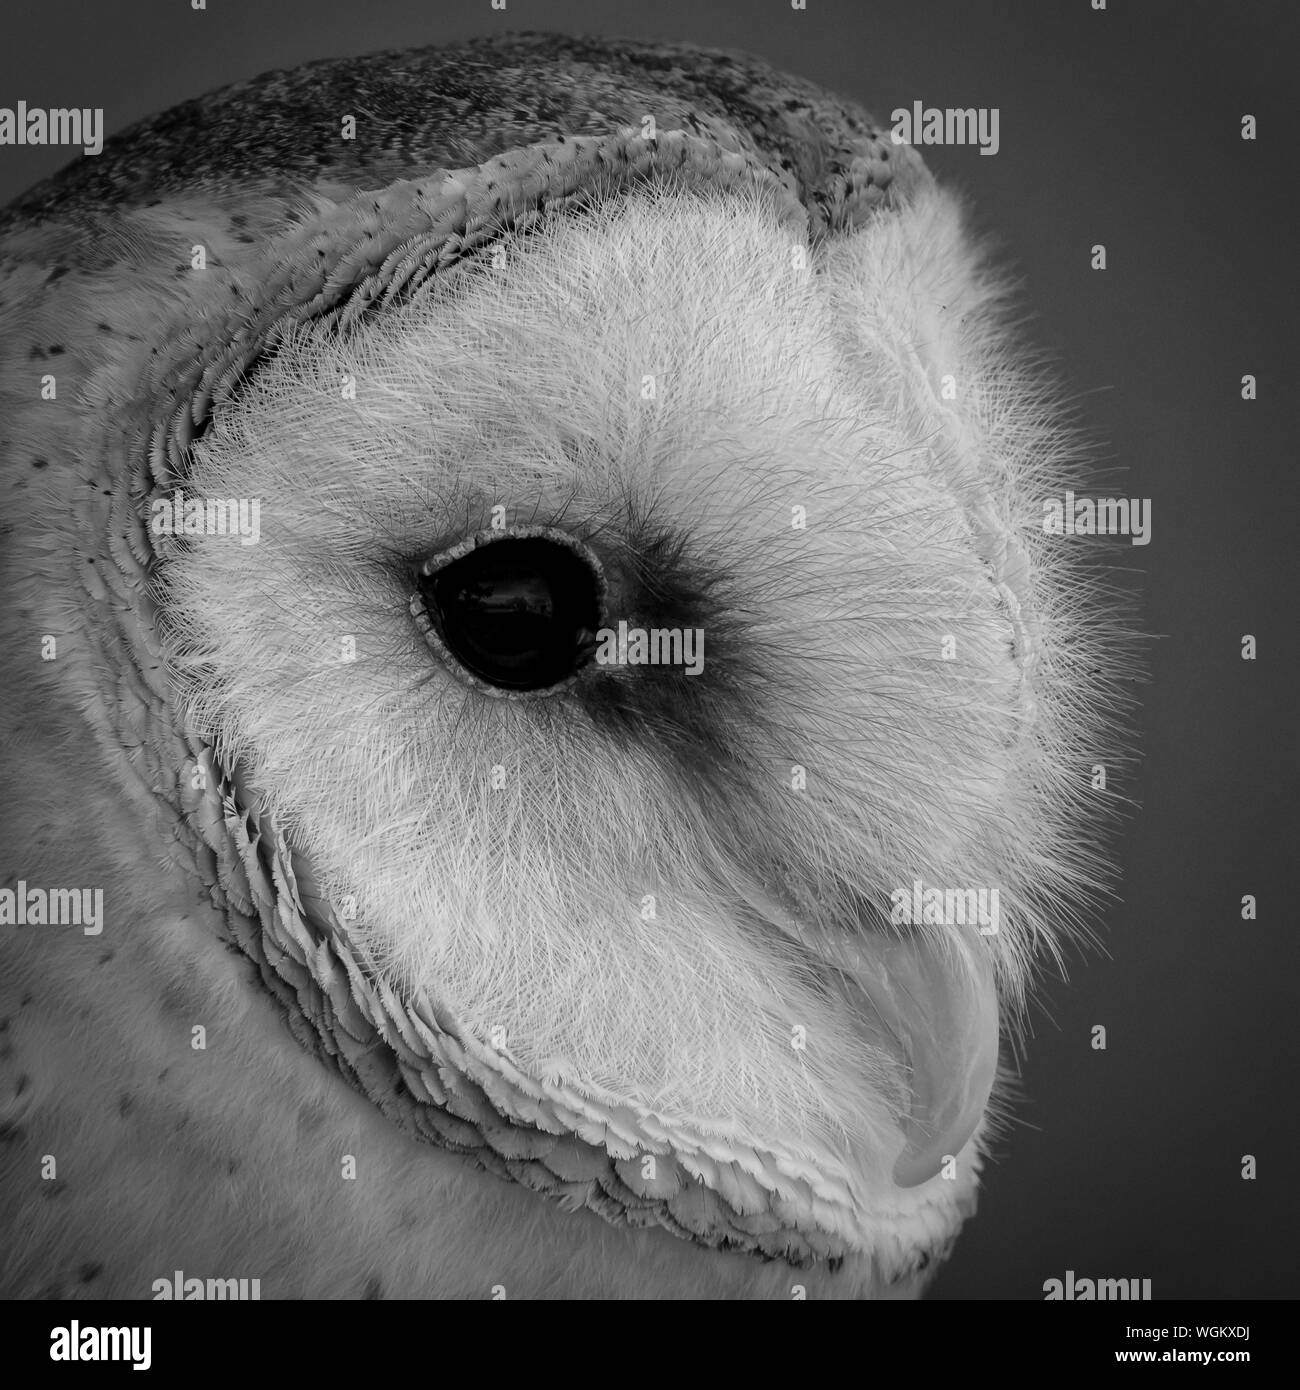 Barn Owl Profile Portrait, Extreme Close-up, B&W Stock Photo